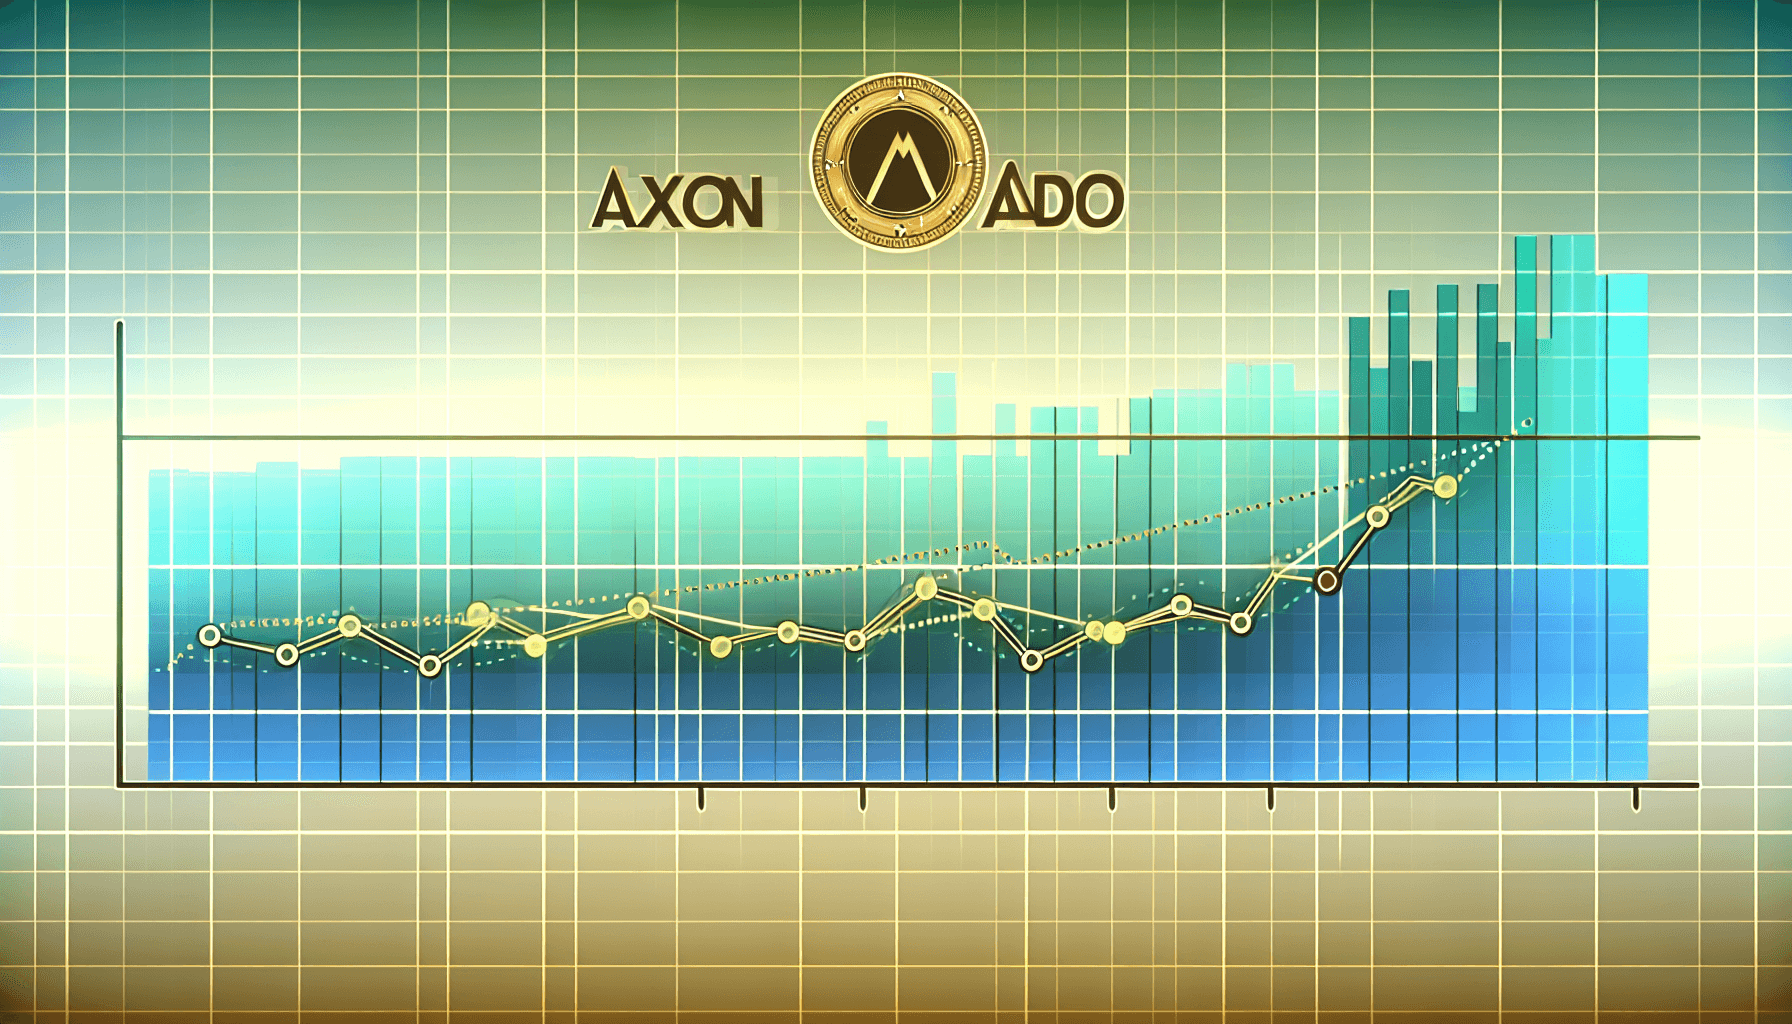 AxonDAO Governance Token Price Analysis